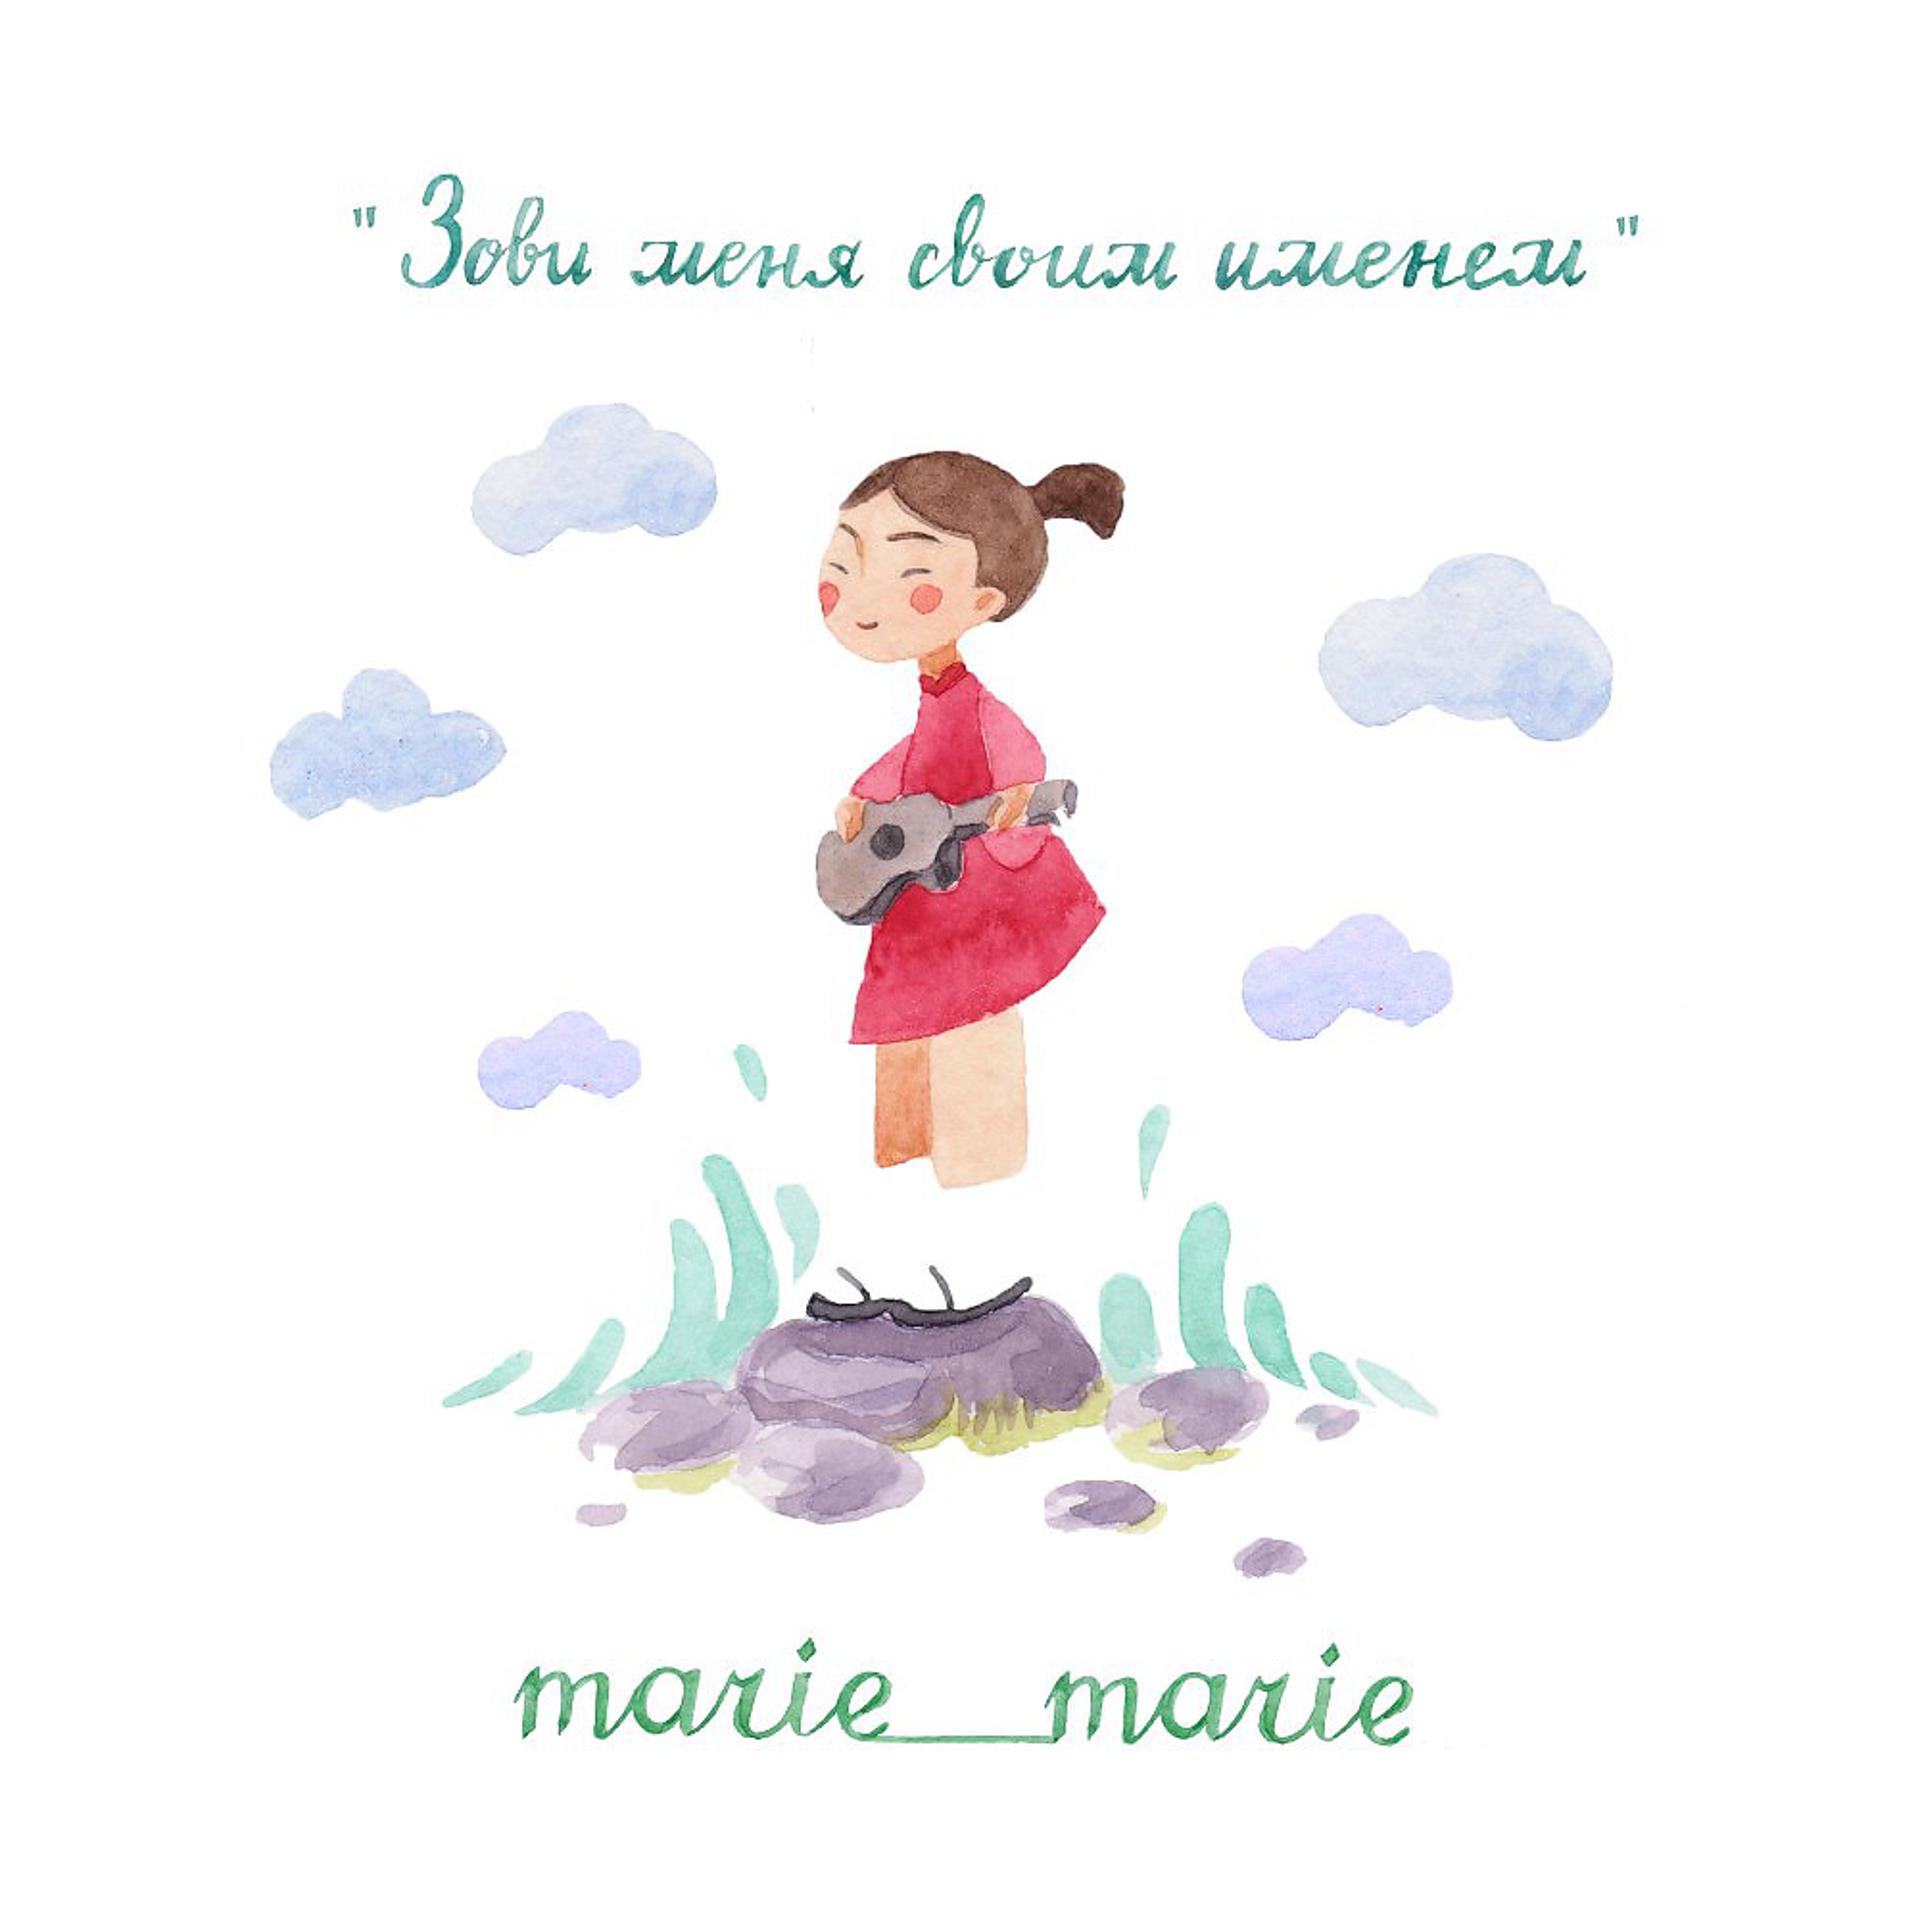 marie___marie - фото